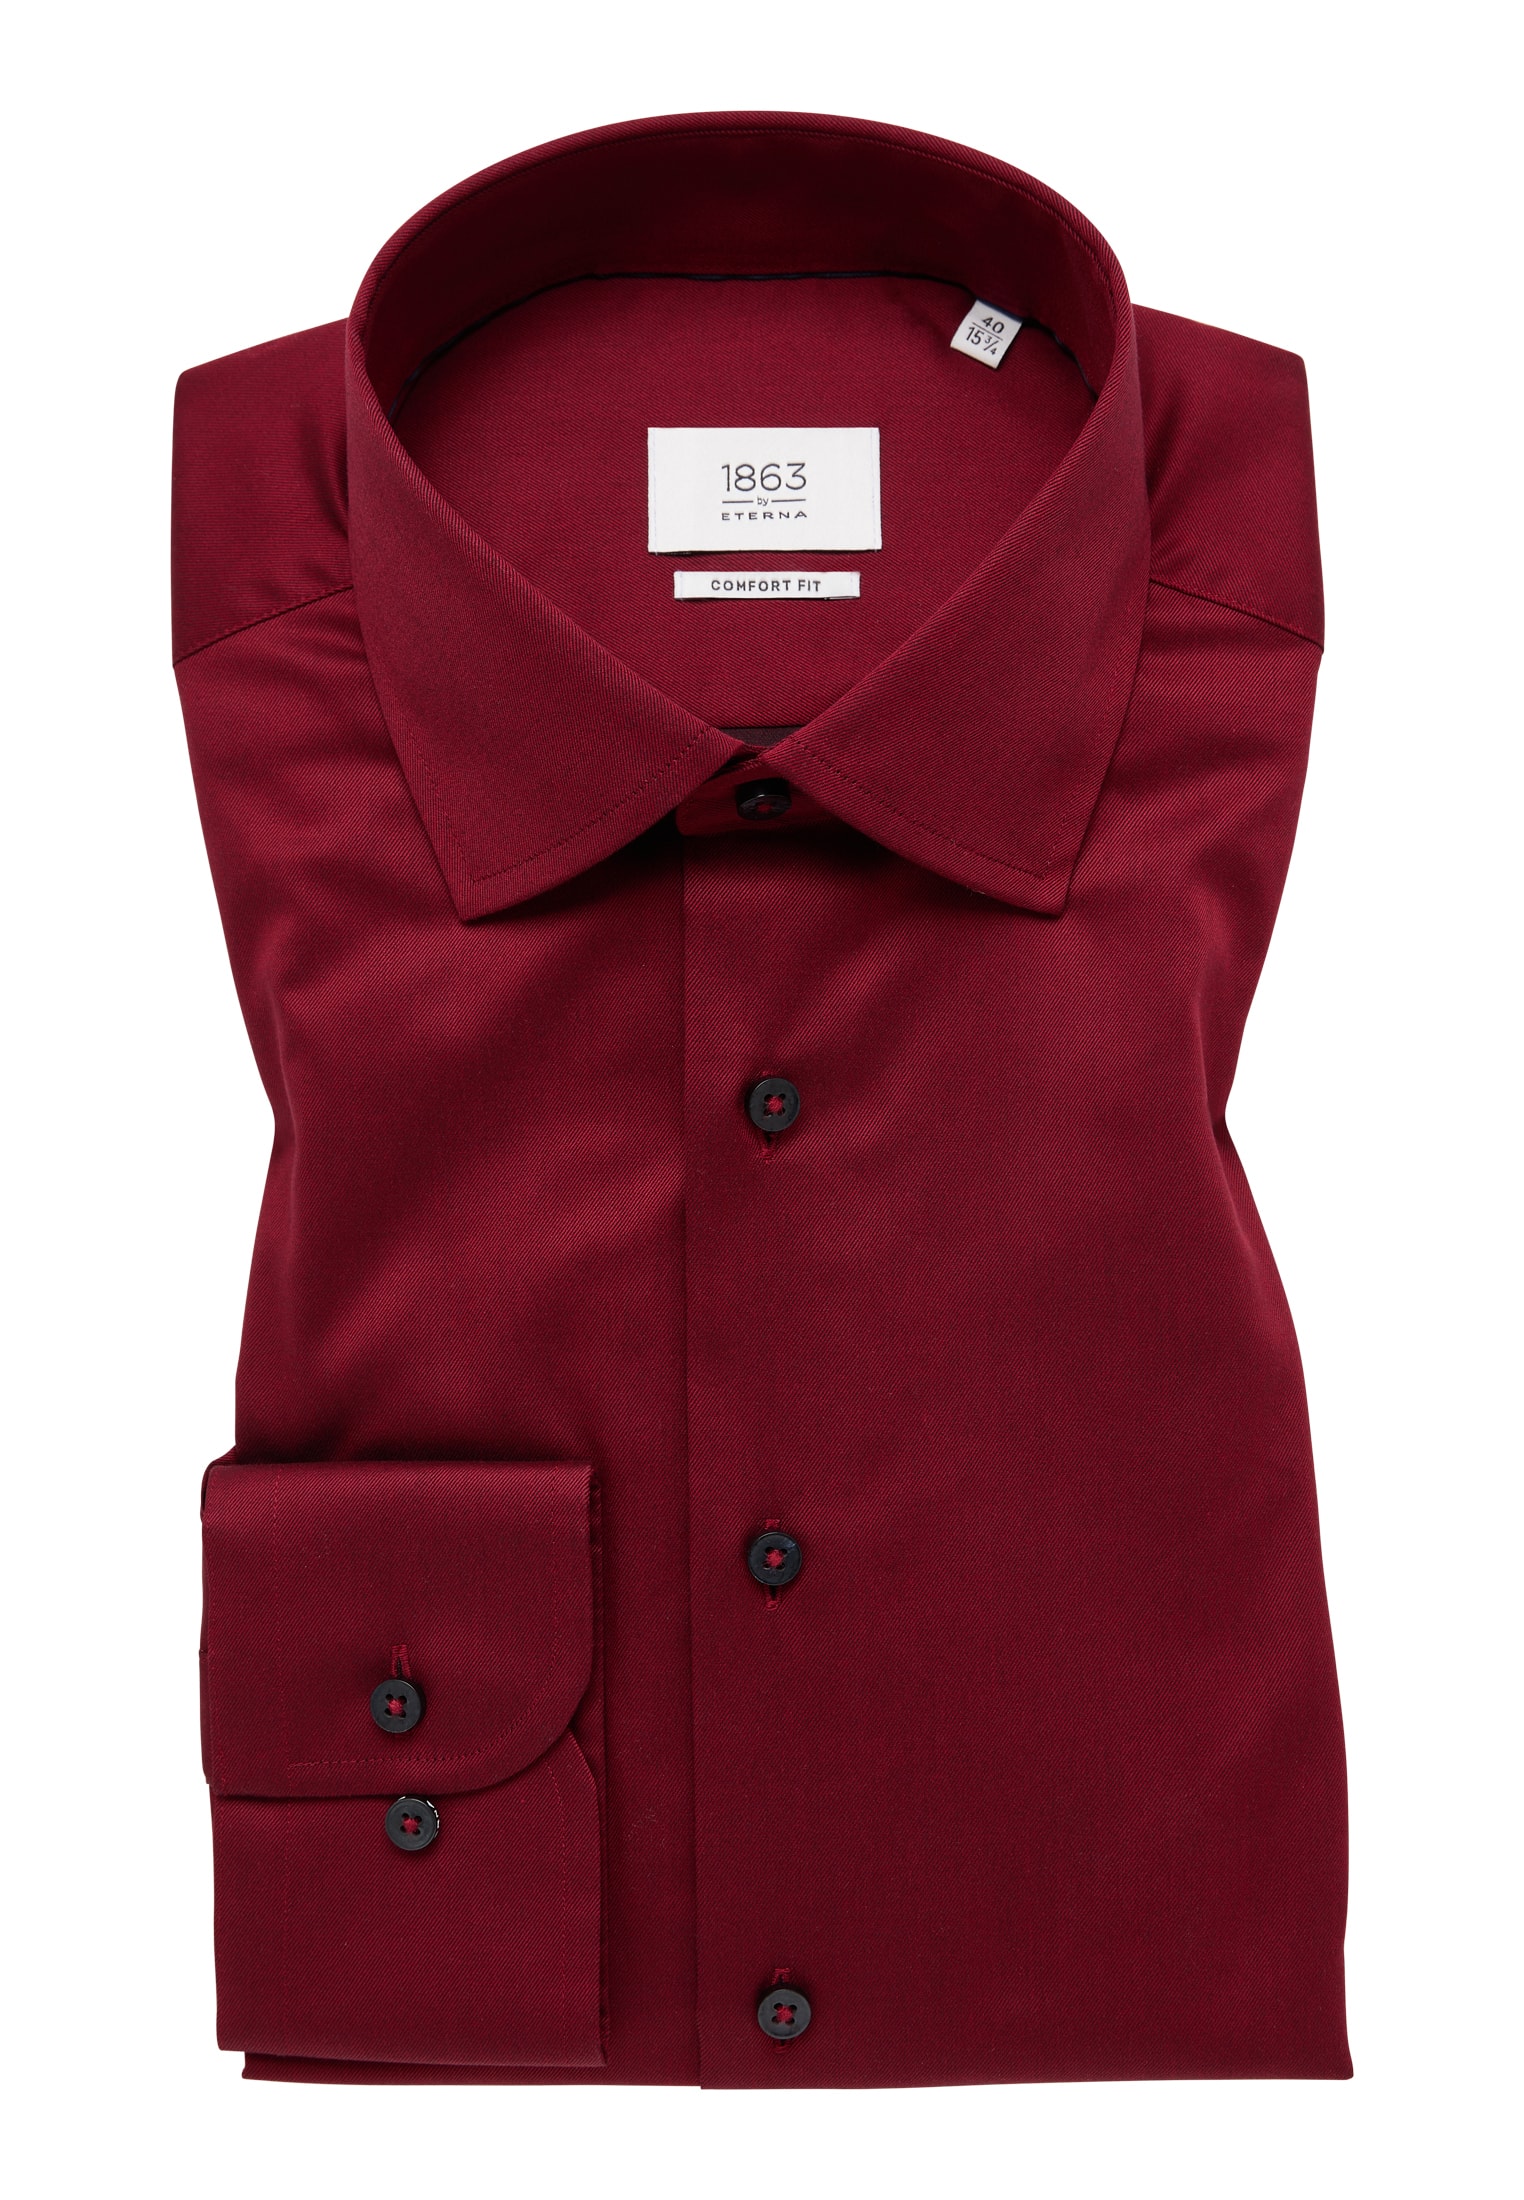 | | Shirt 1SH00739-05-51-43-1/1 in | rubinrot Langarm unifarben COMFORT | rubinrot Luxury 43 FIT